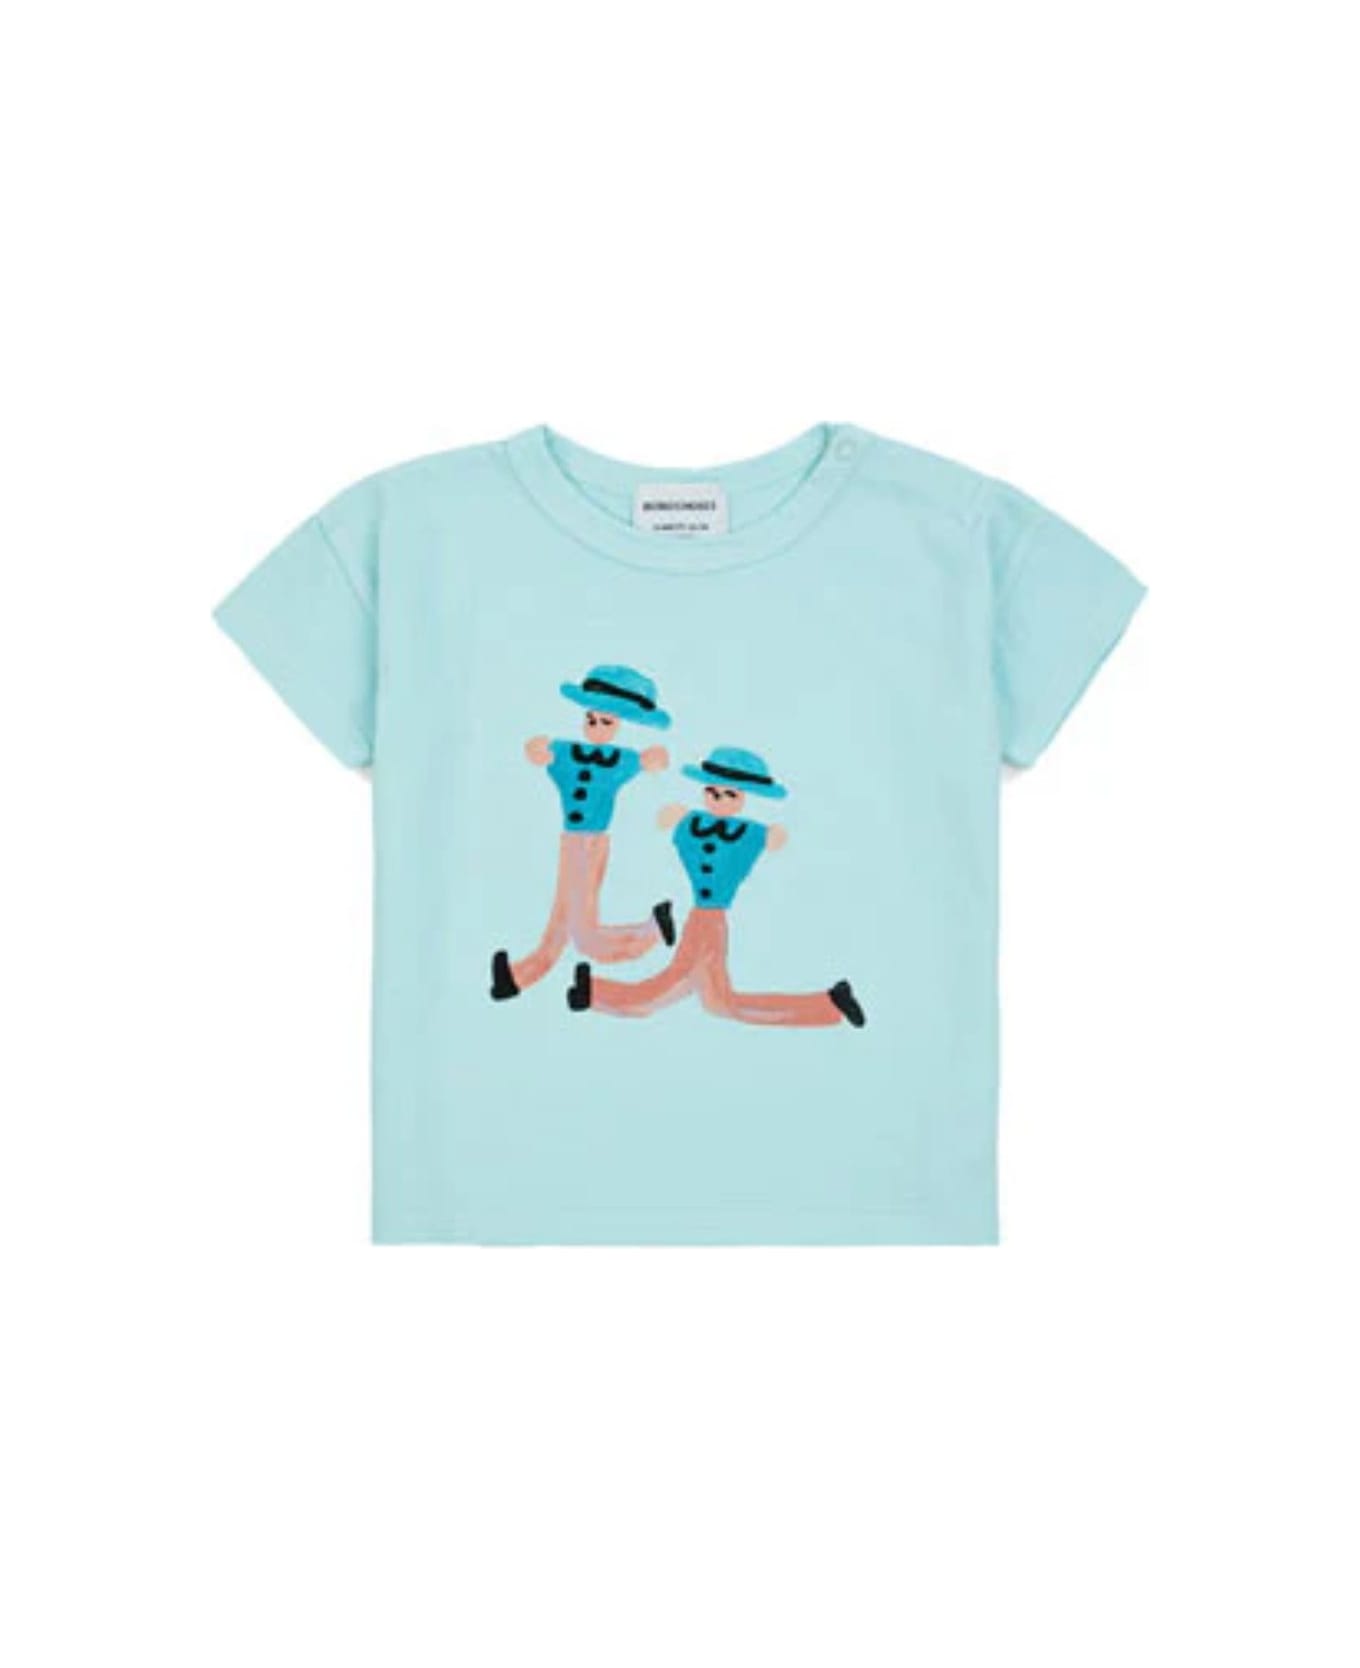 Bobo Choses Baby Dancing Giants All Over T-shirt - Light Blue